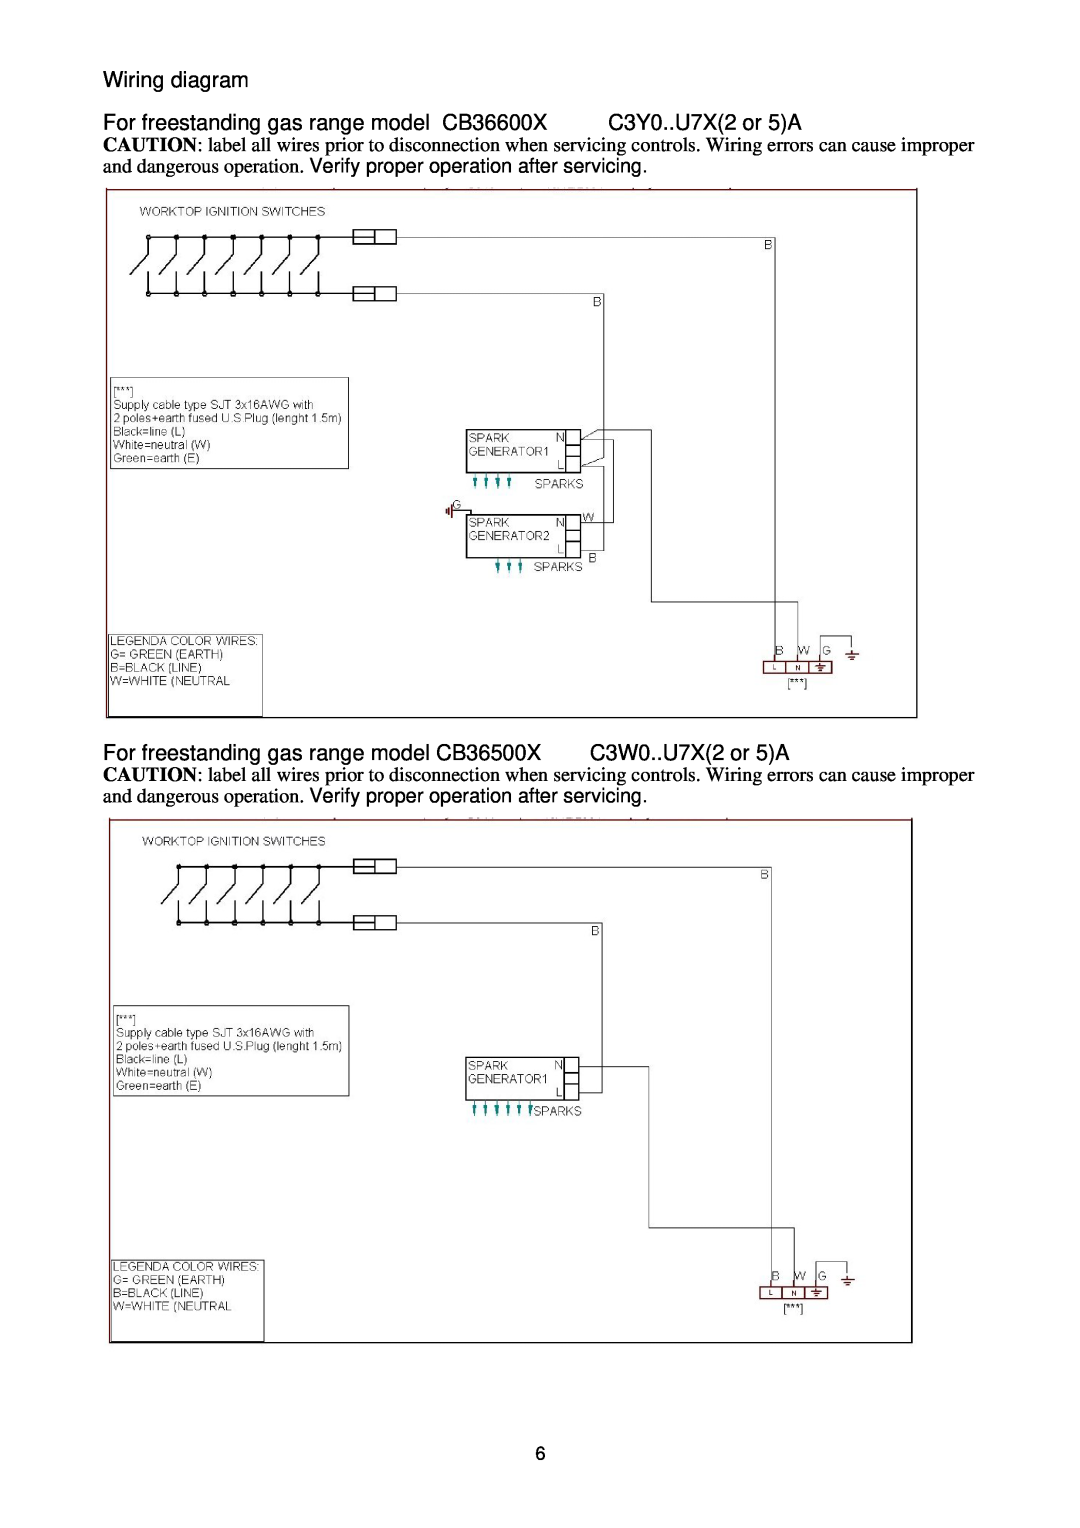 Bertazzoni CB36500X Wiring diagram, For freestanding gas range model CB36600X, C3Y0..U7X2 or 5A, C3W0..U7X2 or 5A 